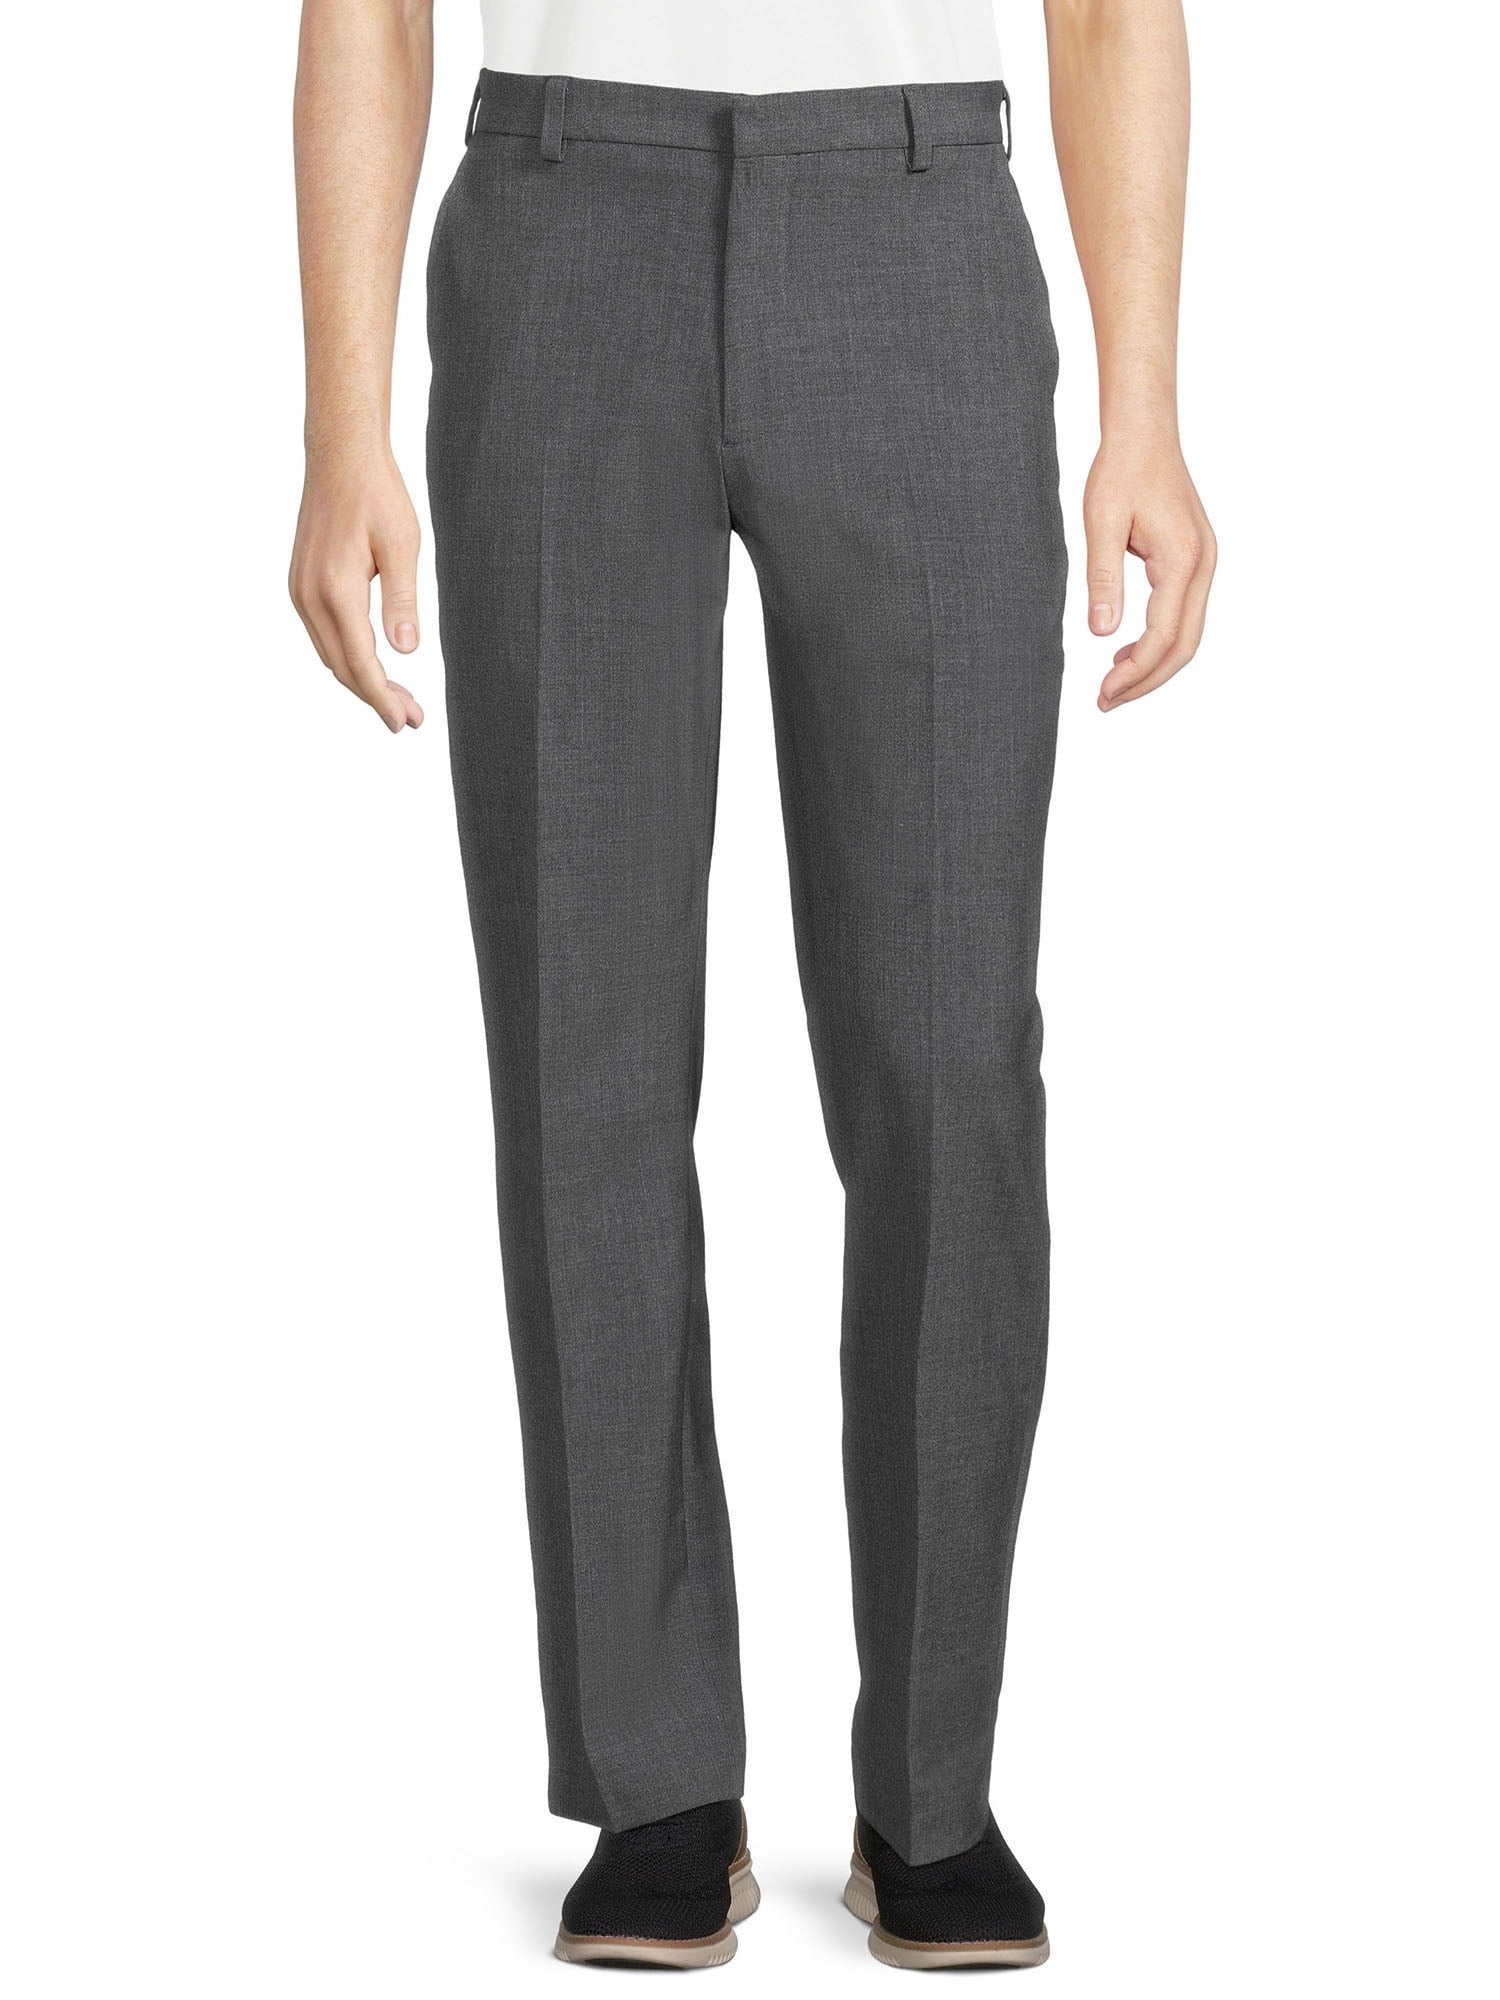 George Men's and Big Men's Premium Comfort Flat Front Suit Pants